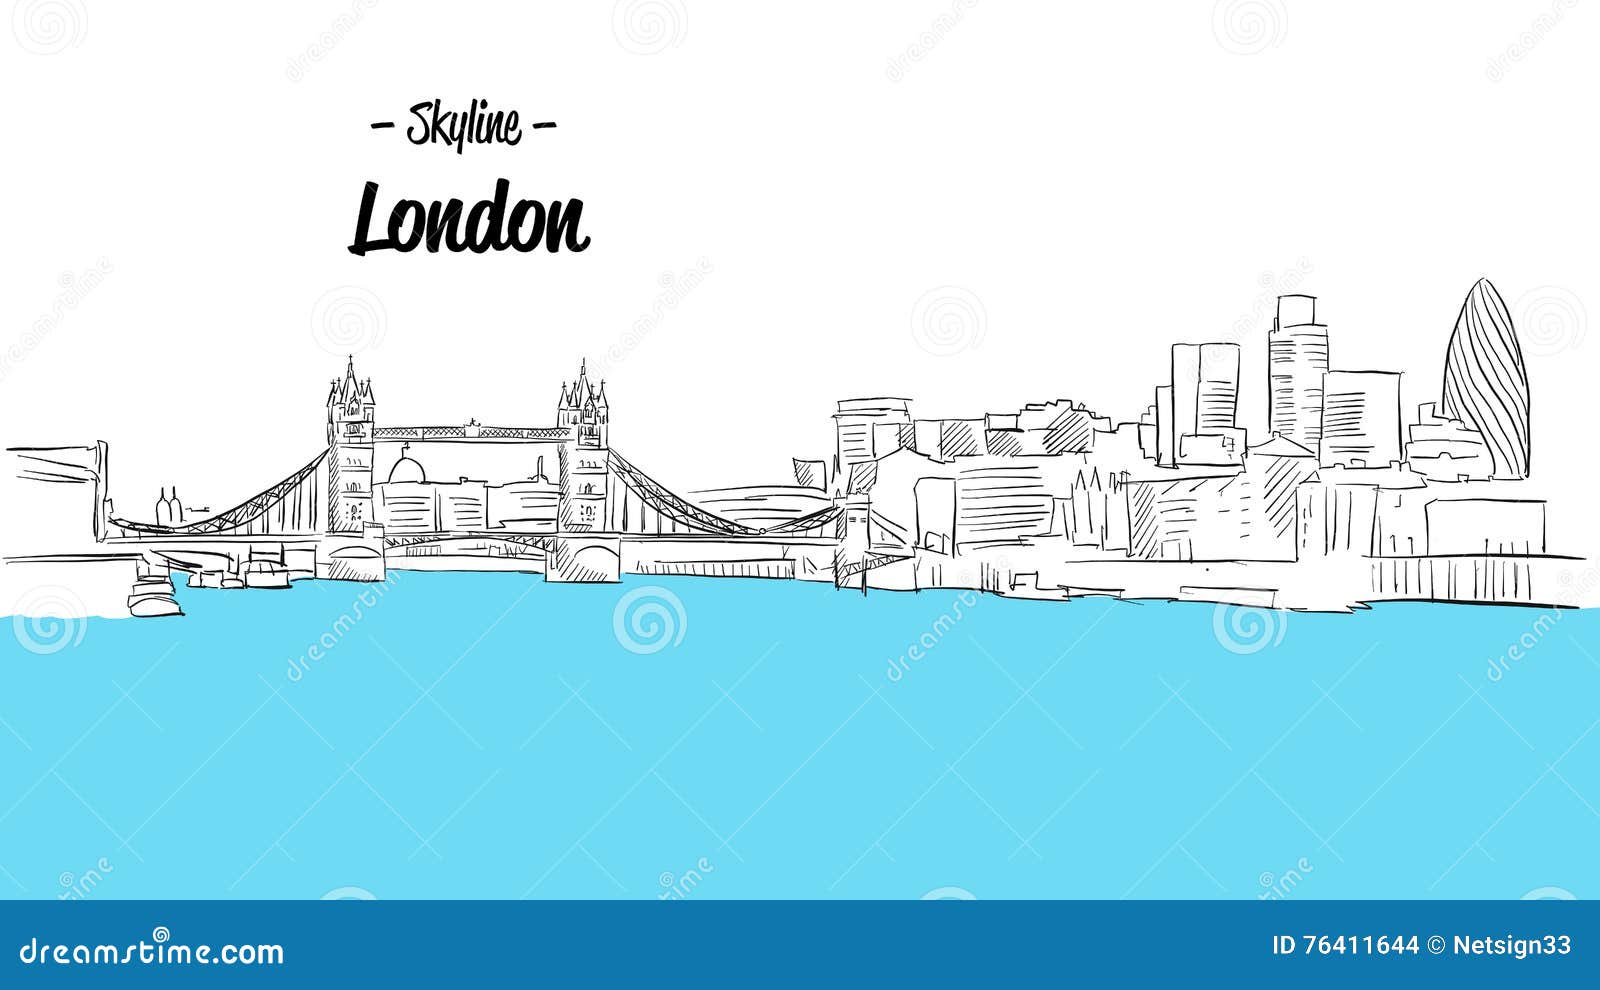 London Skyline Sketch stock illustration. Illustration of background